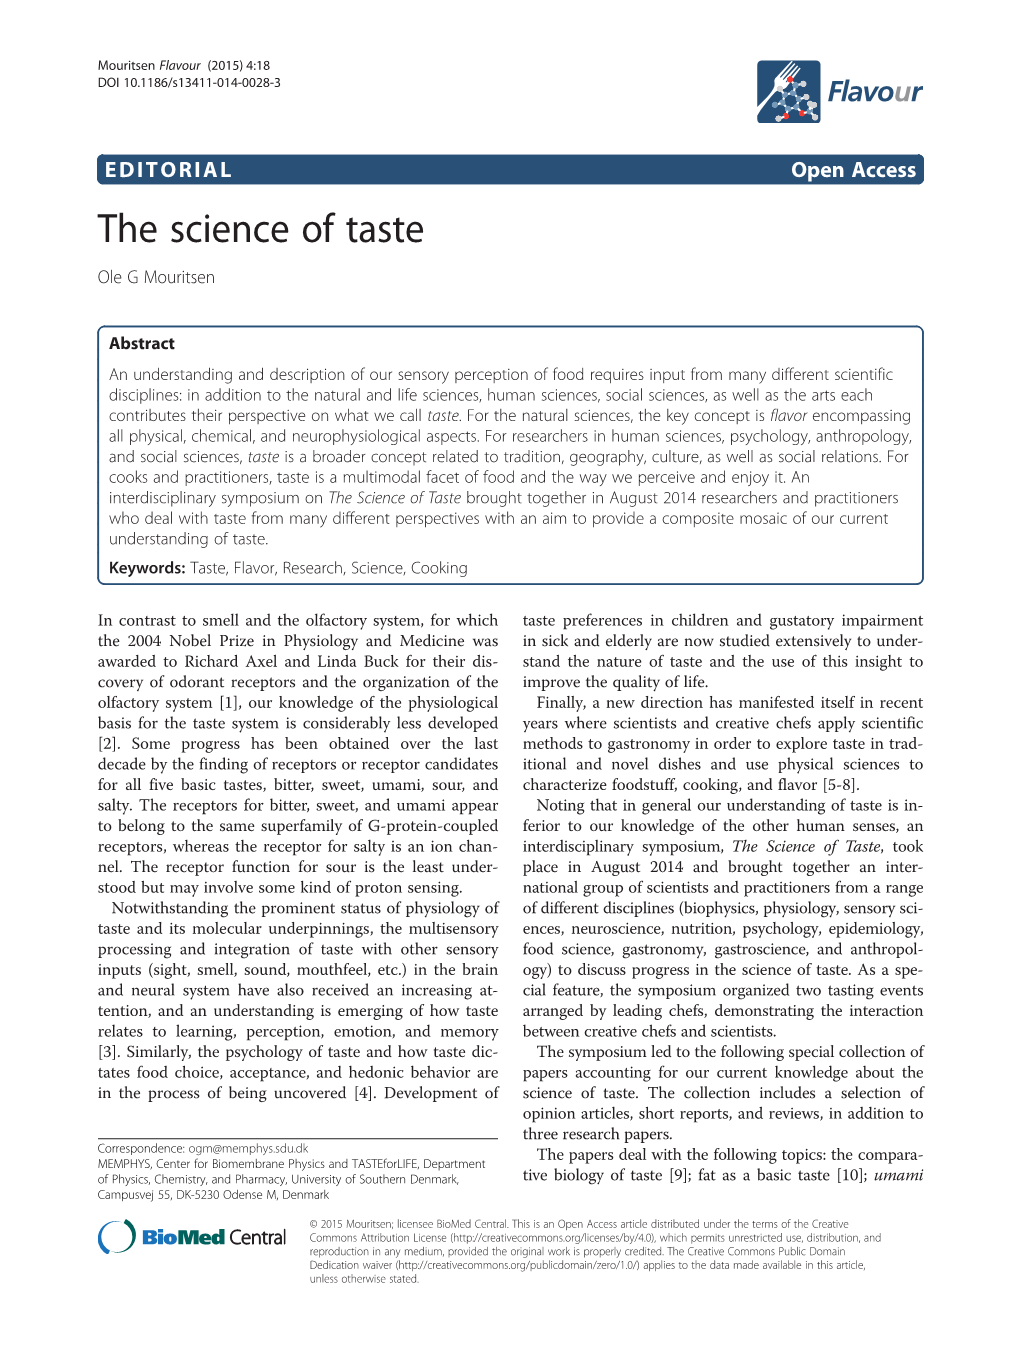 The Science of Taste Ole G Mouritsen